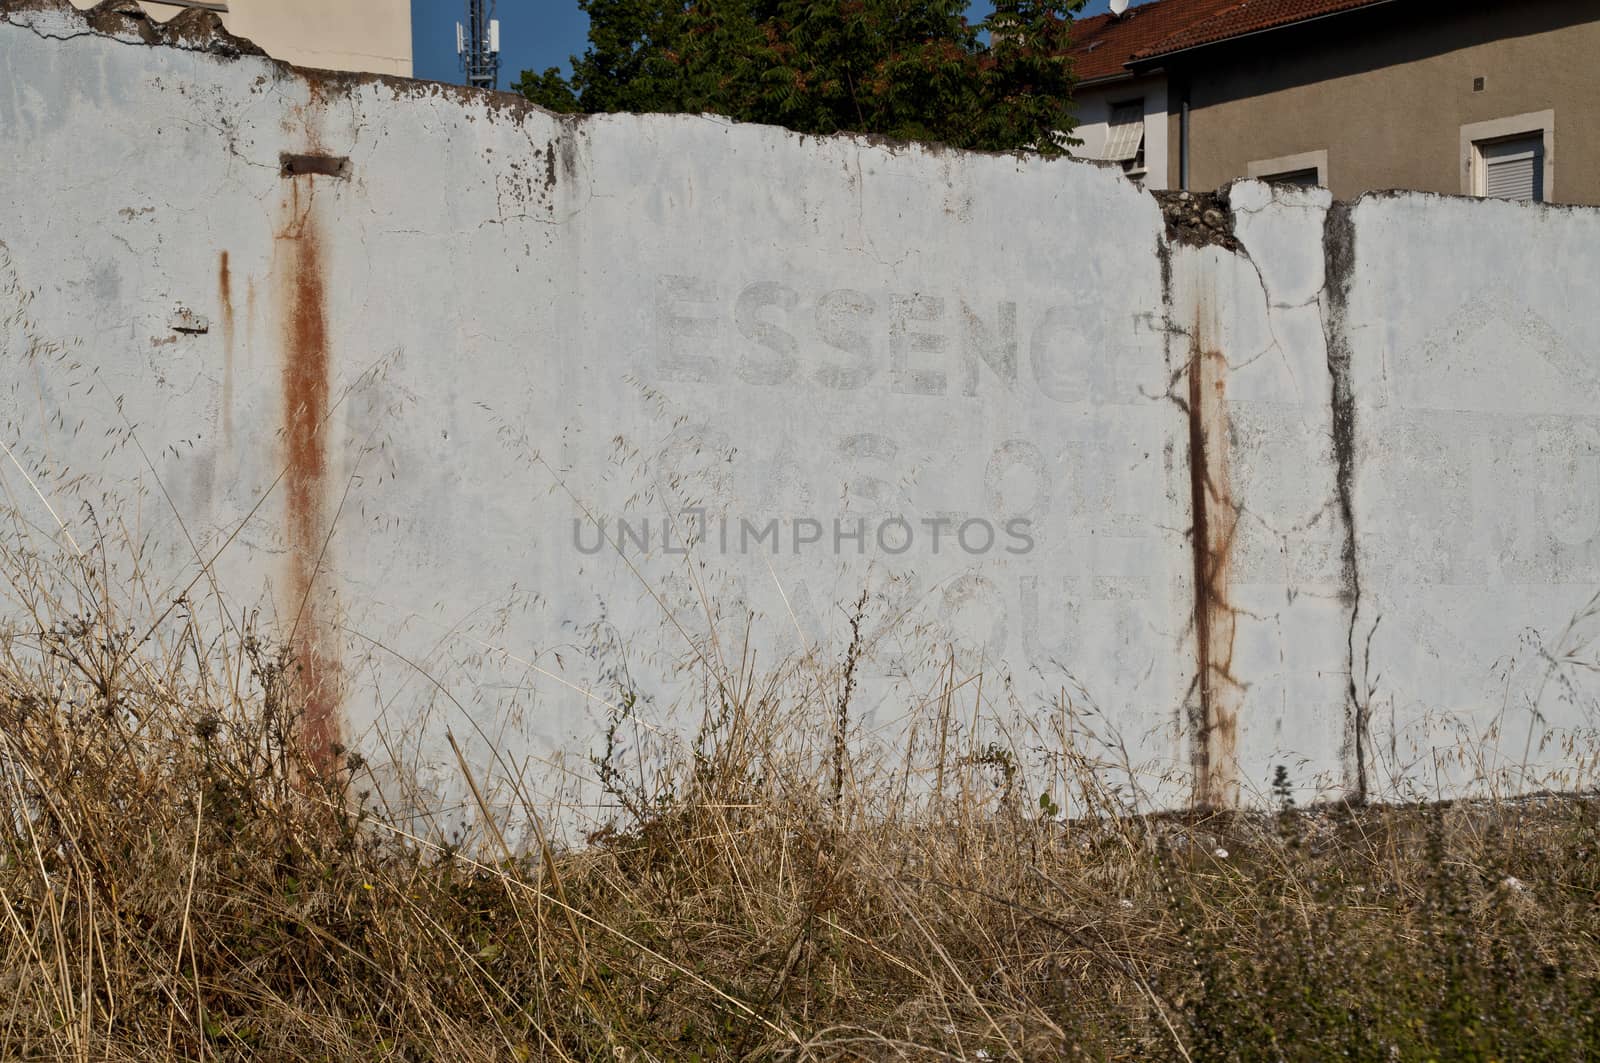 Old advertisement in the demolished Stade de la Palla football stadium in Valence, France.